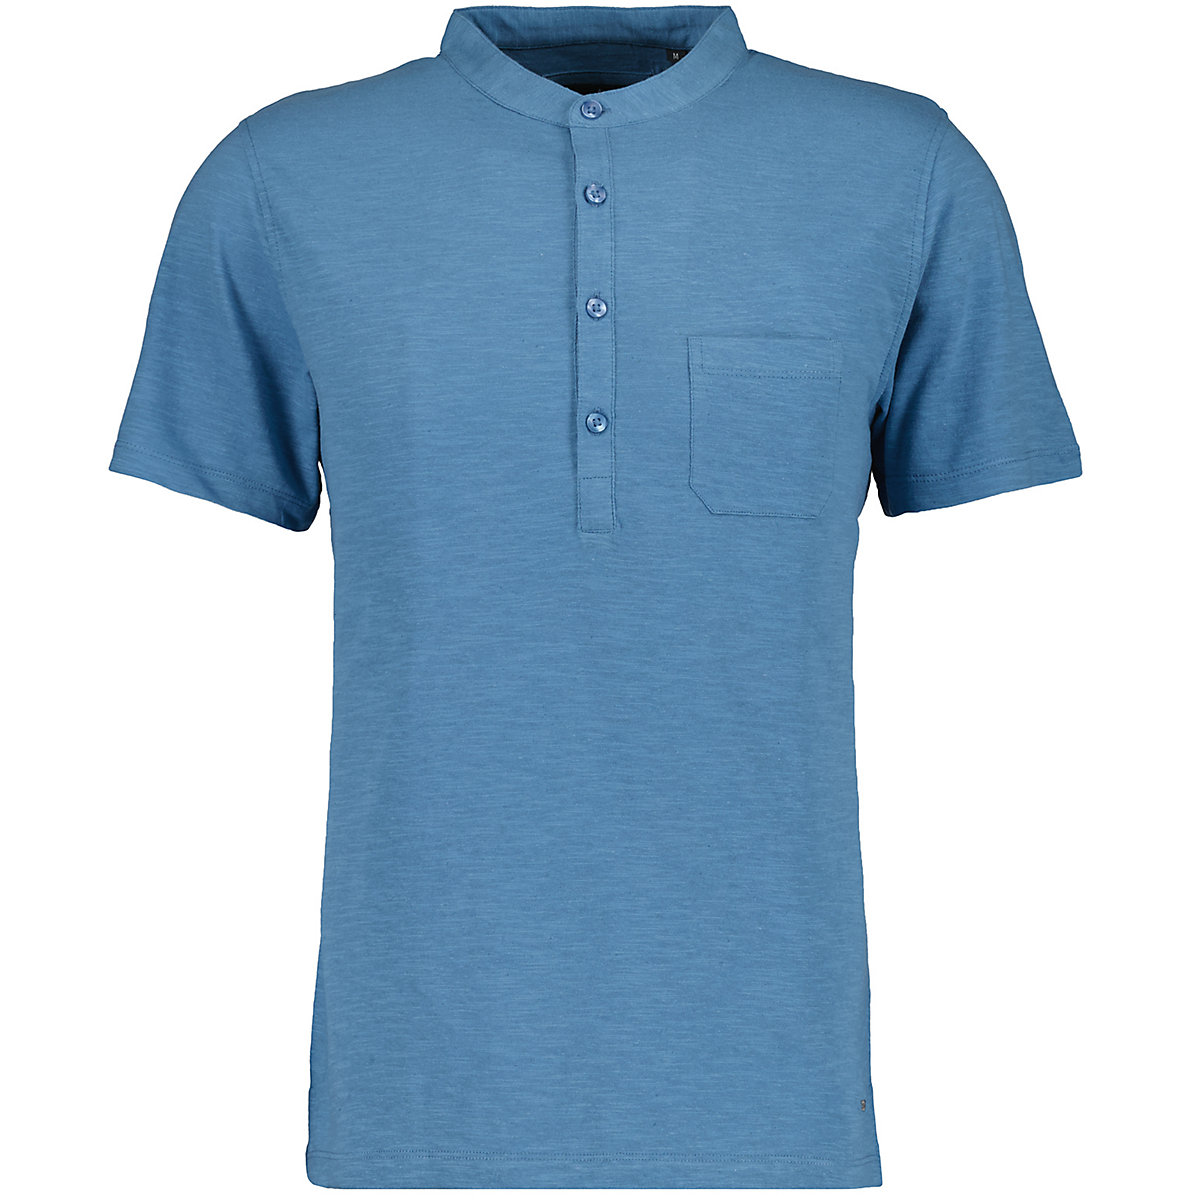 RAGMAN Serafino-Shirt Baumwolle-Leinen T-Shirts blau